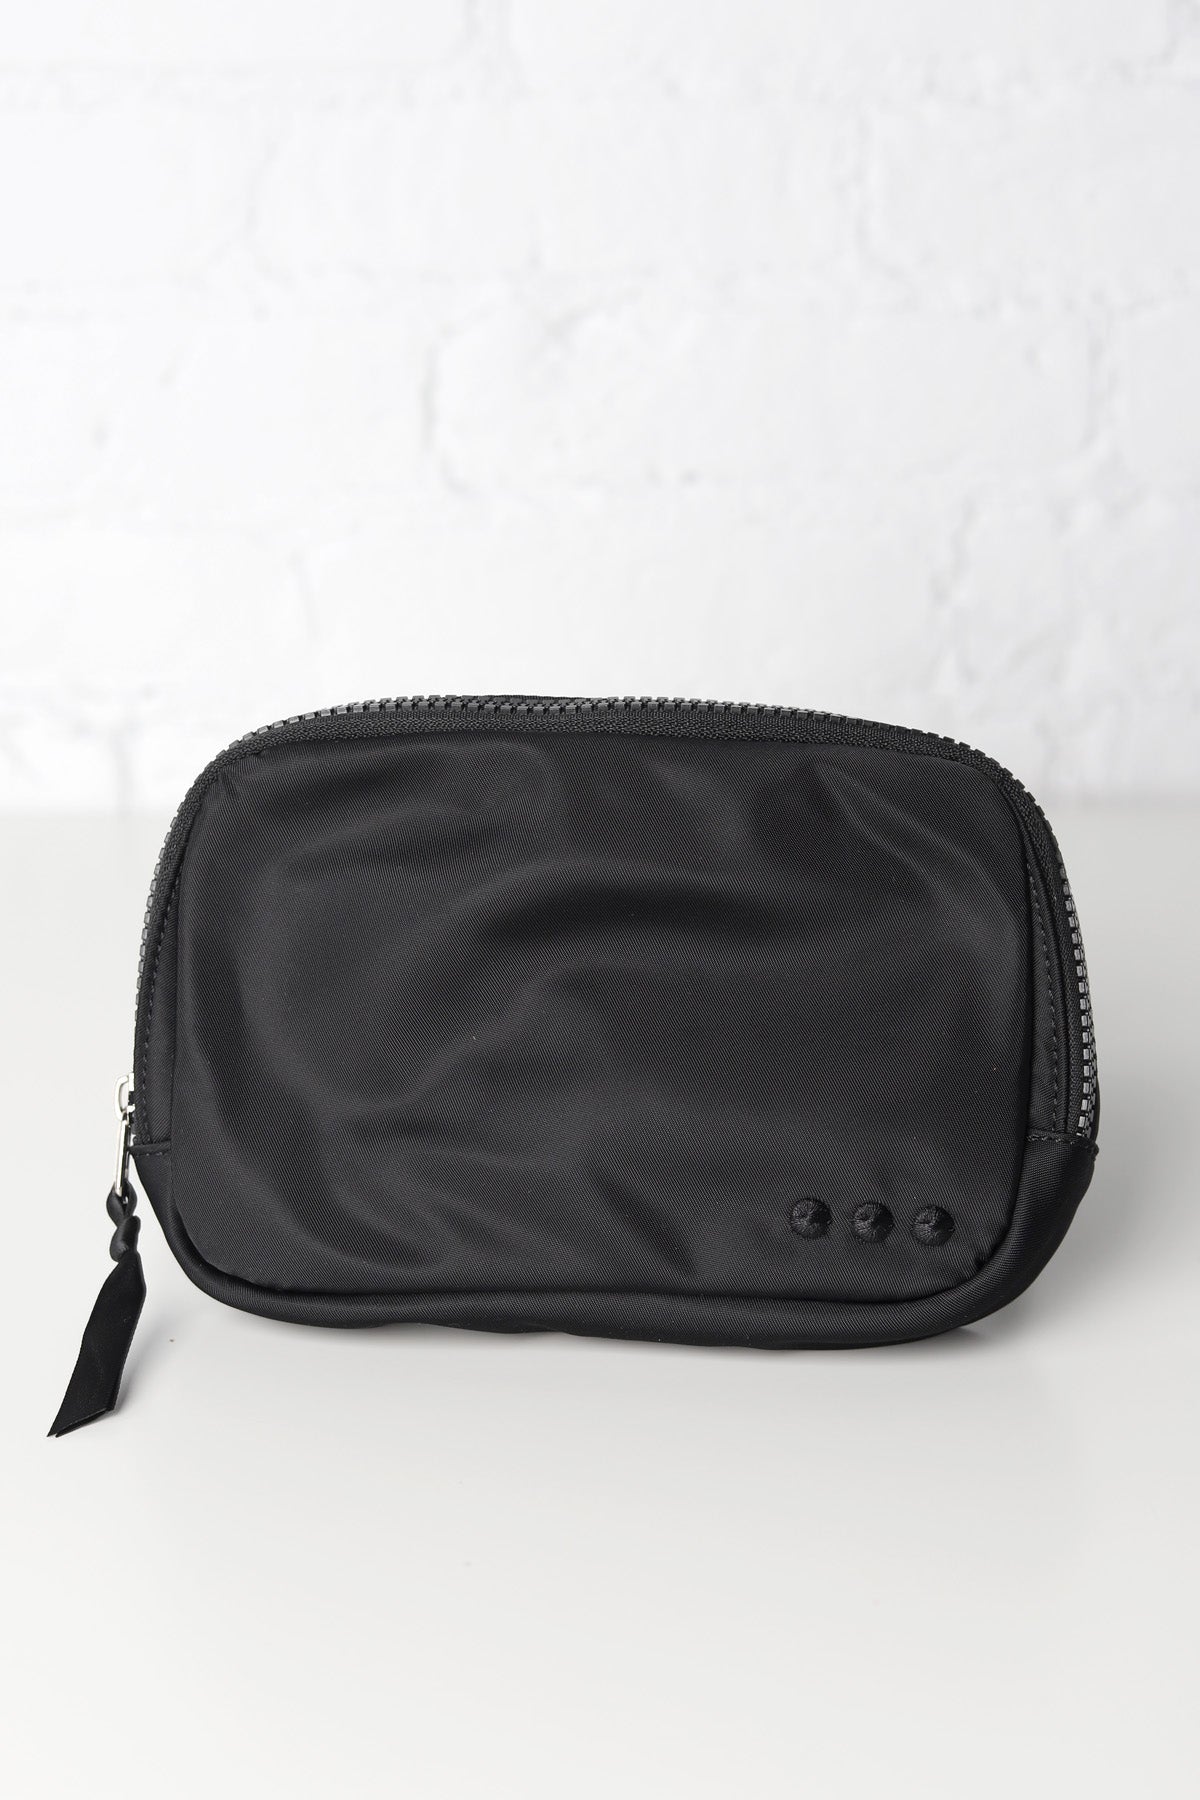 Nadya Black Nylon Bum Bag